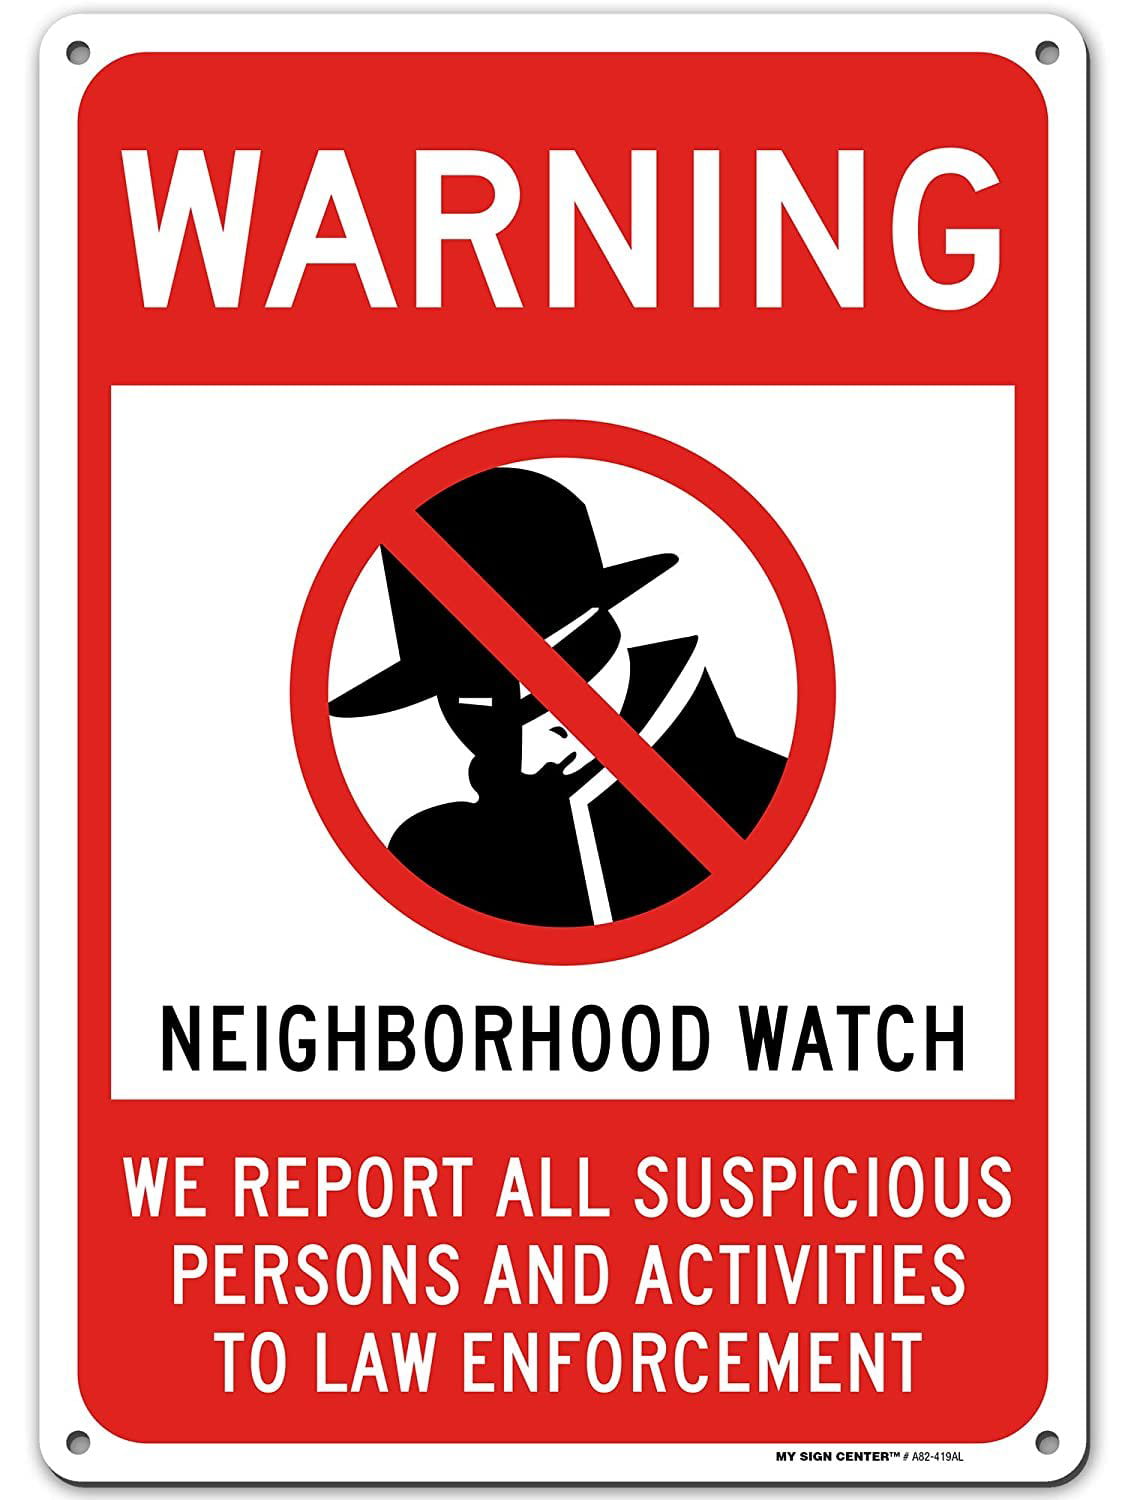 Warning Neighborhood Watch Sign Suspicious Activity Report to Police